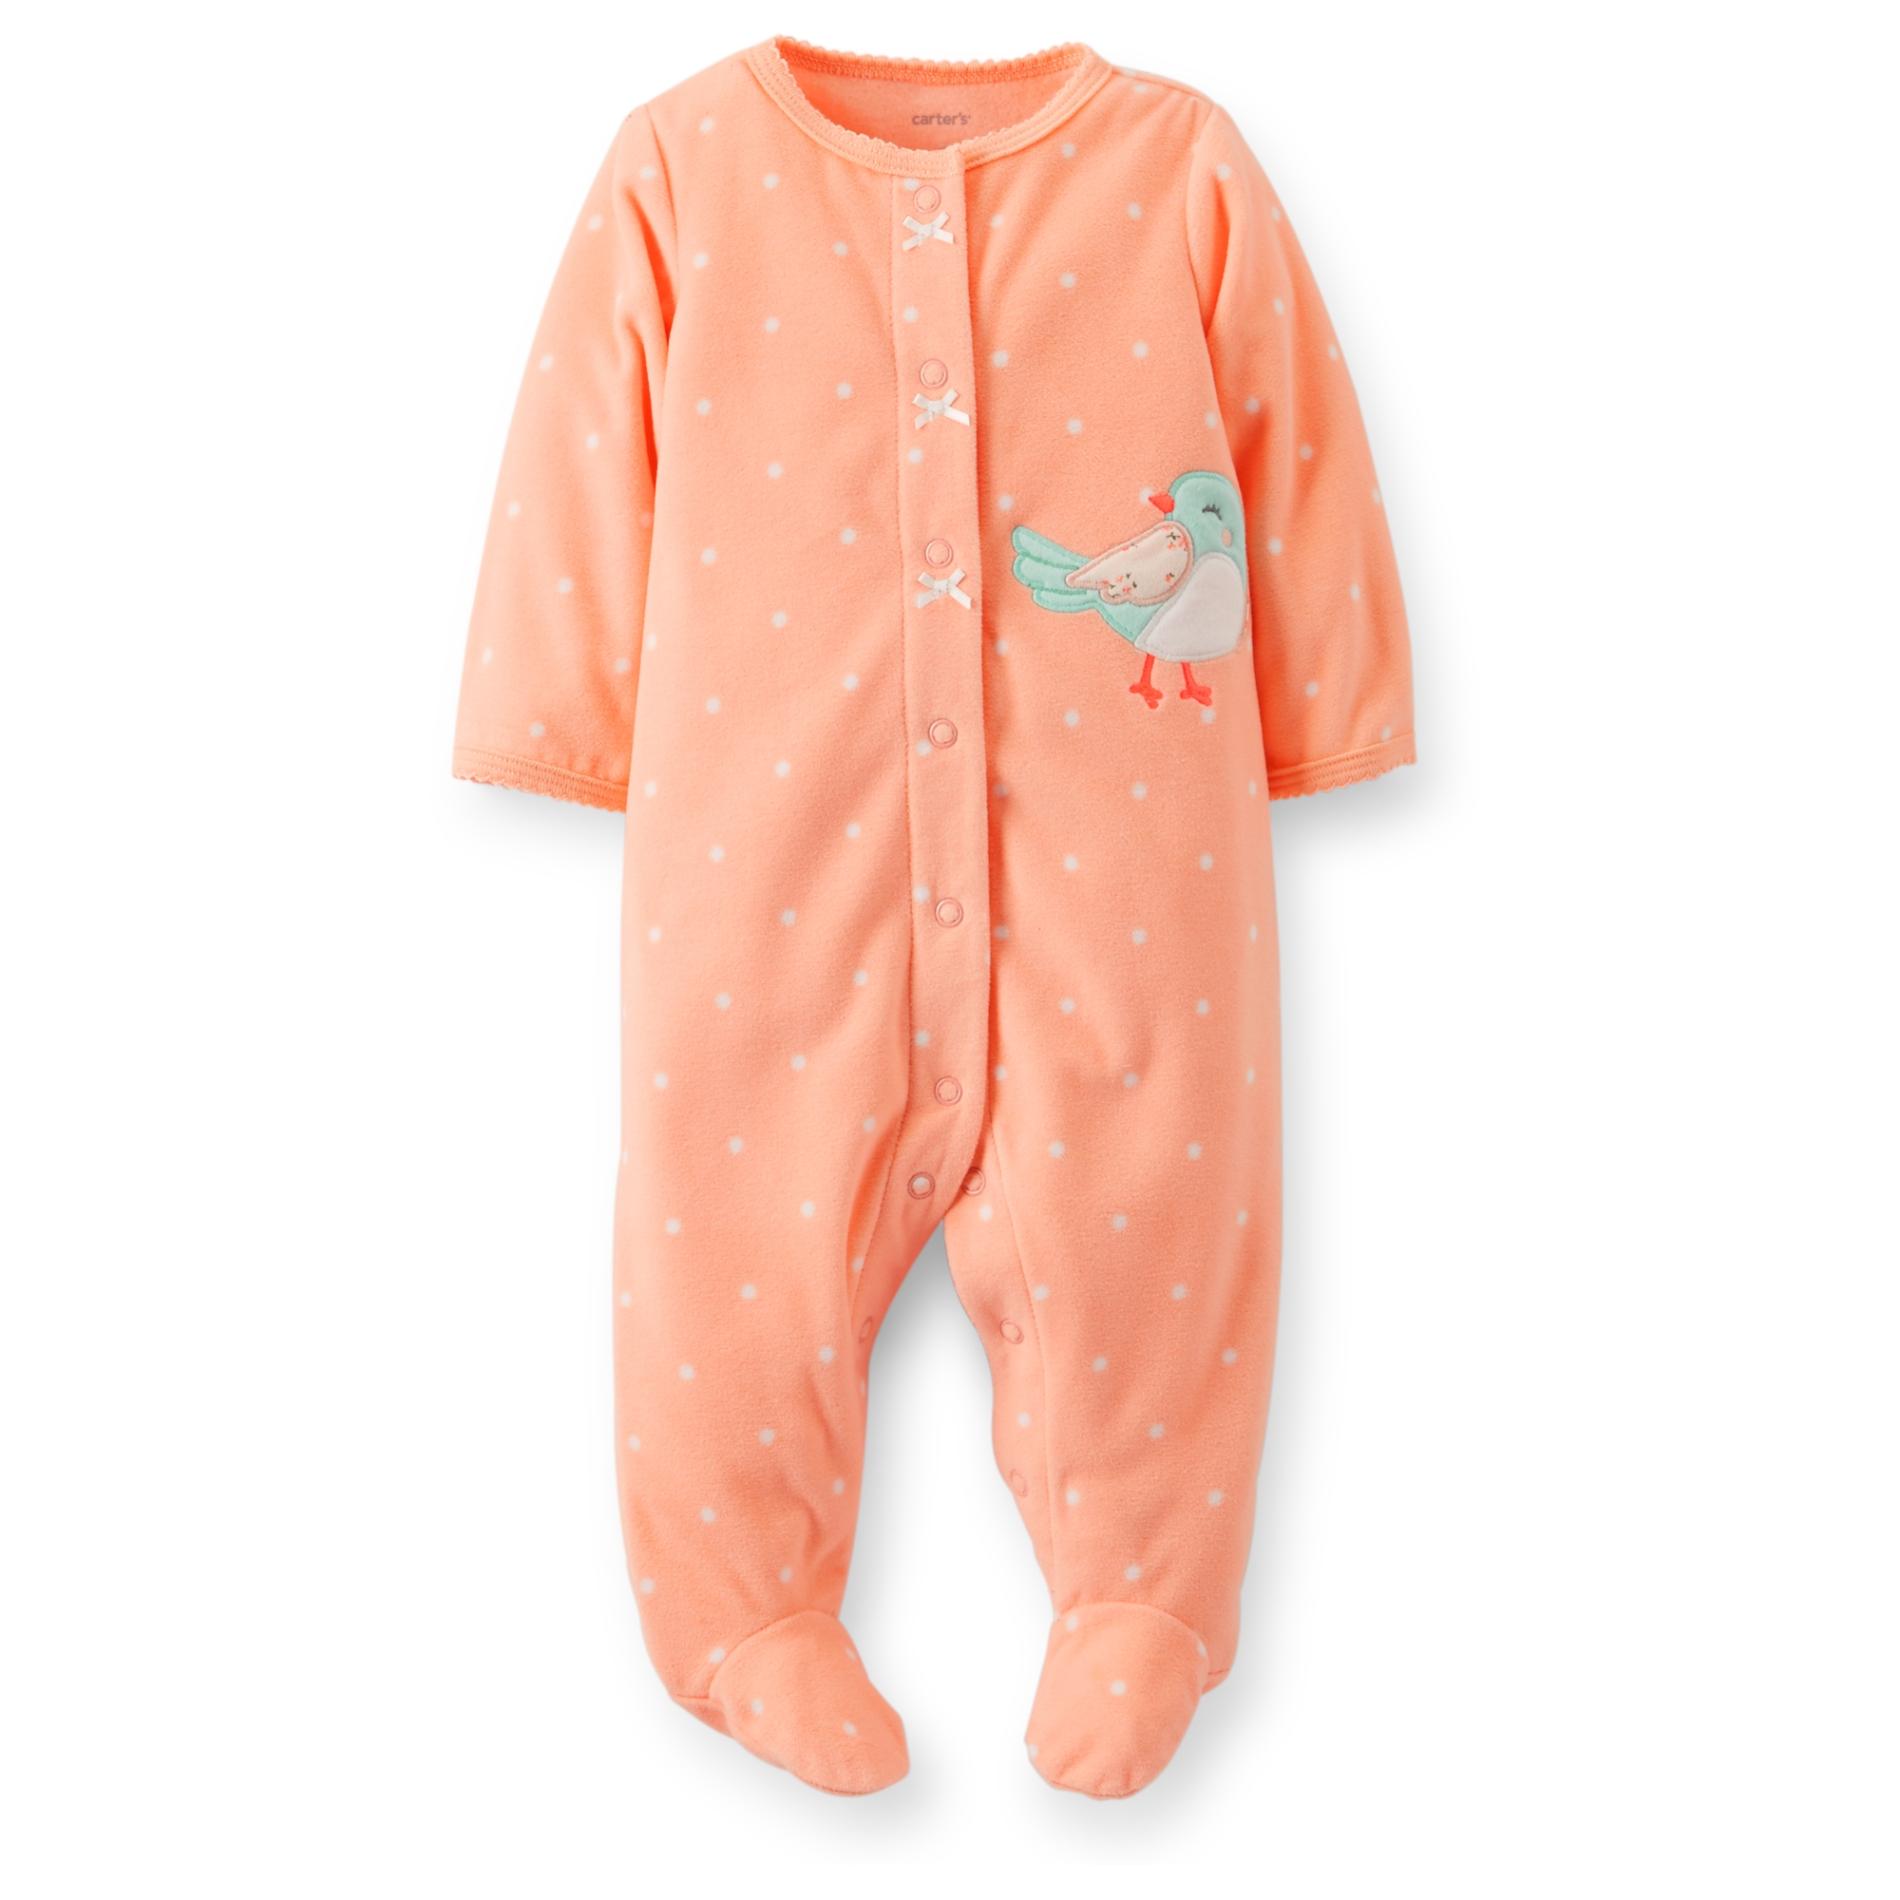 Carter's Newborn Girl's Microfleece Sleeper Pajamas - Bird